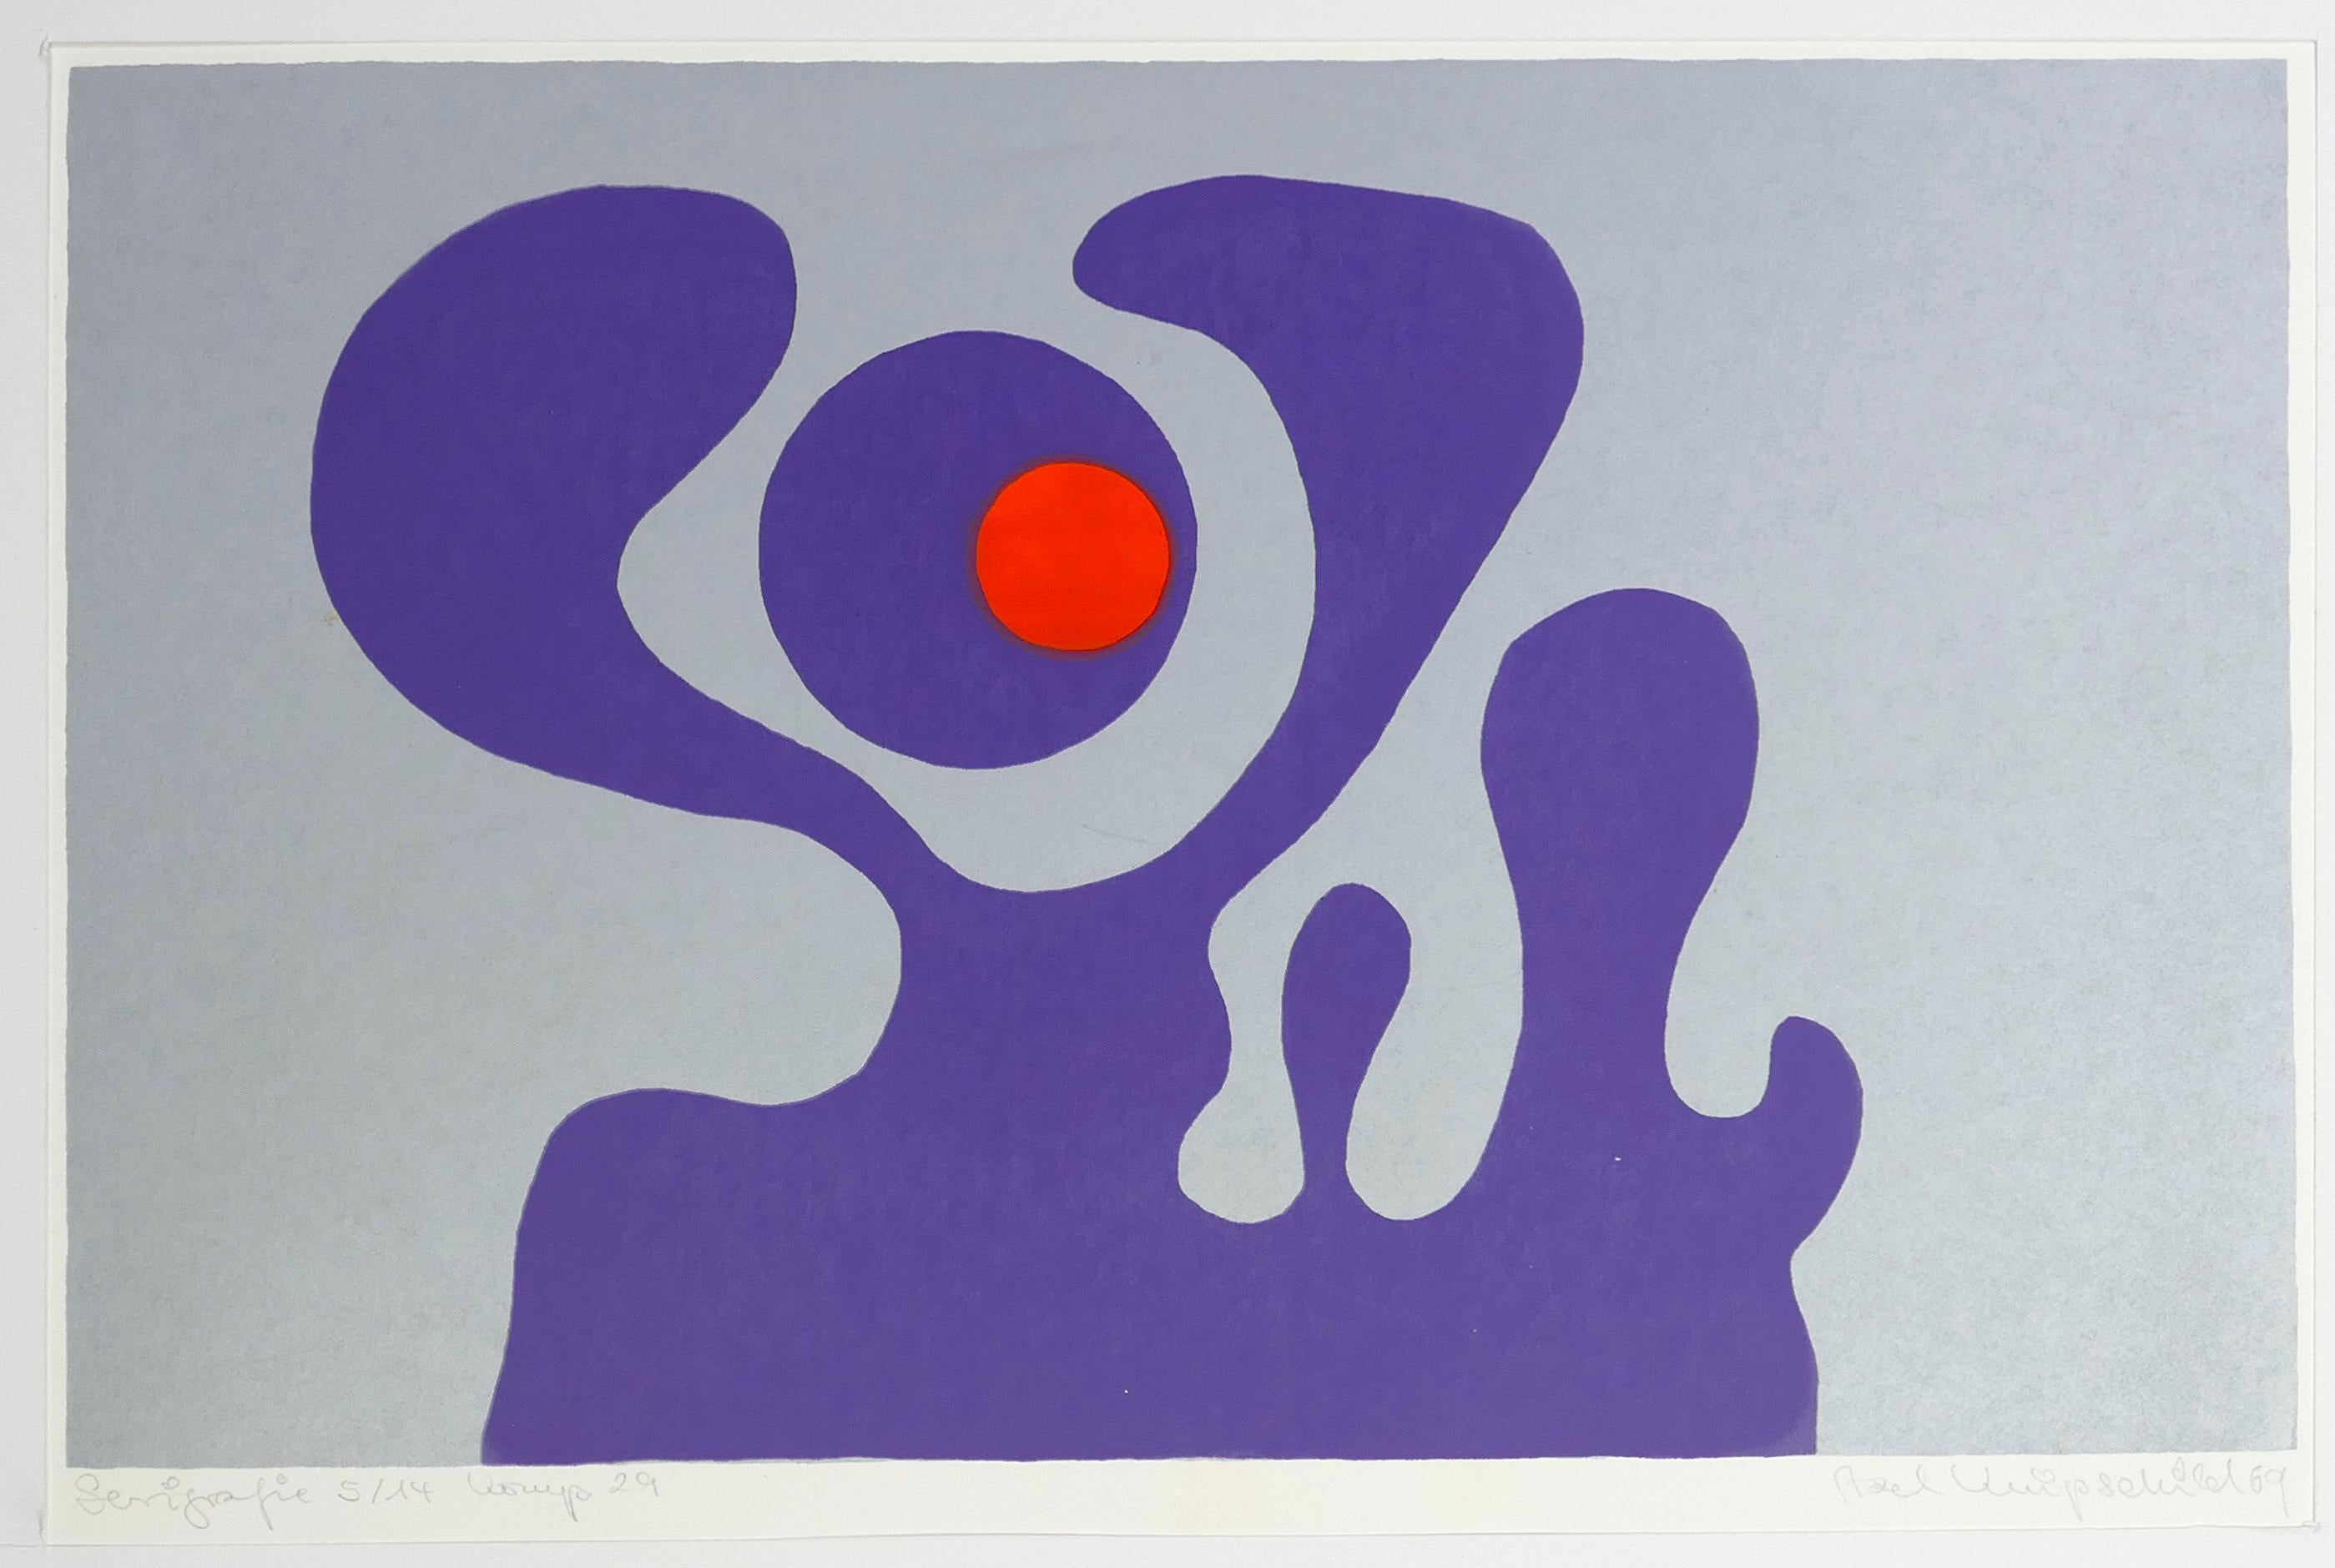 Axel Knipschild Abstract Print - Violet Fantasy - Original Screen Print by A. Knipschild - 1969